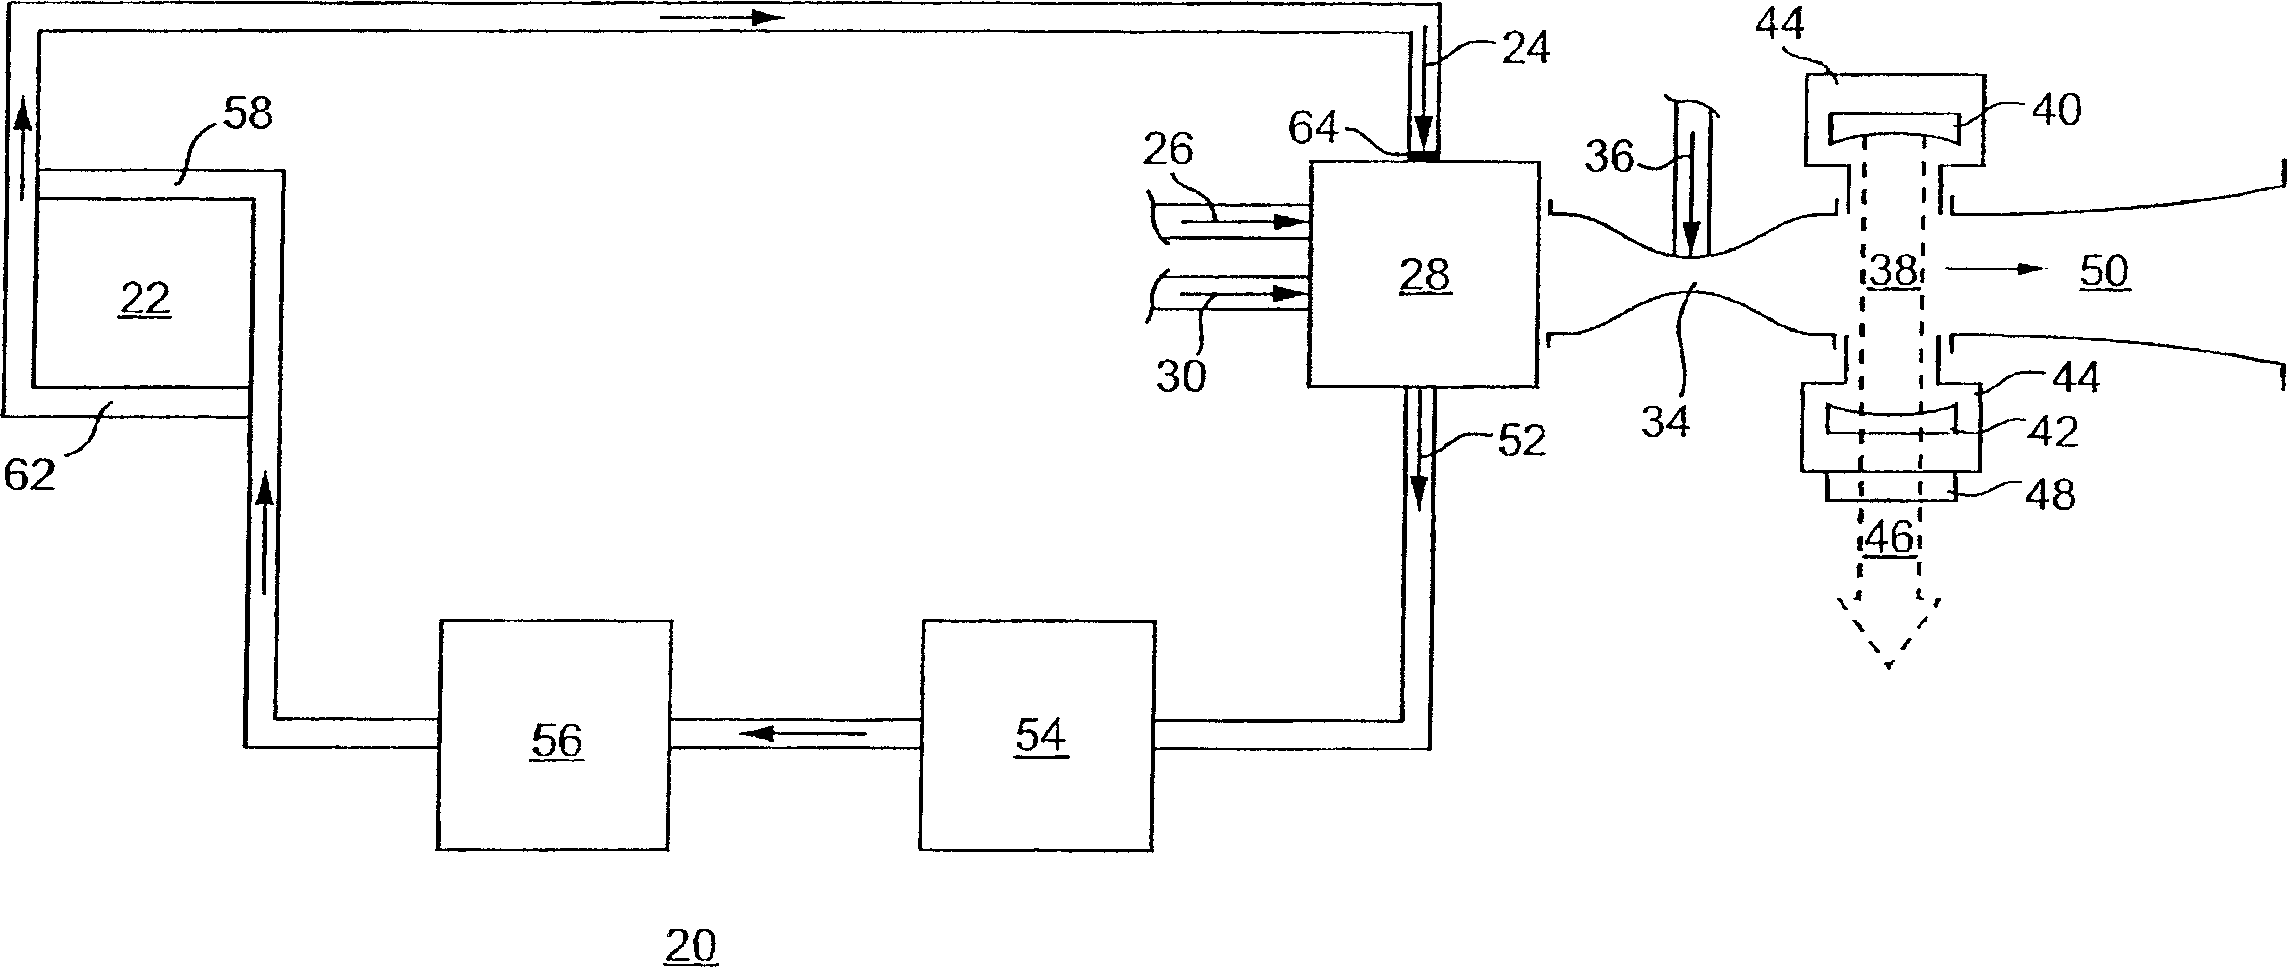 Phase-change heat exchanger